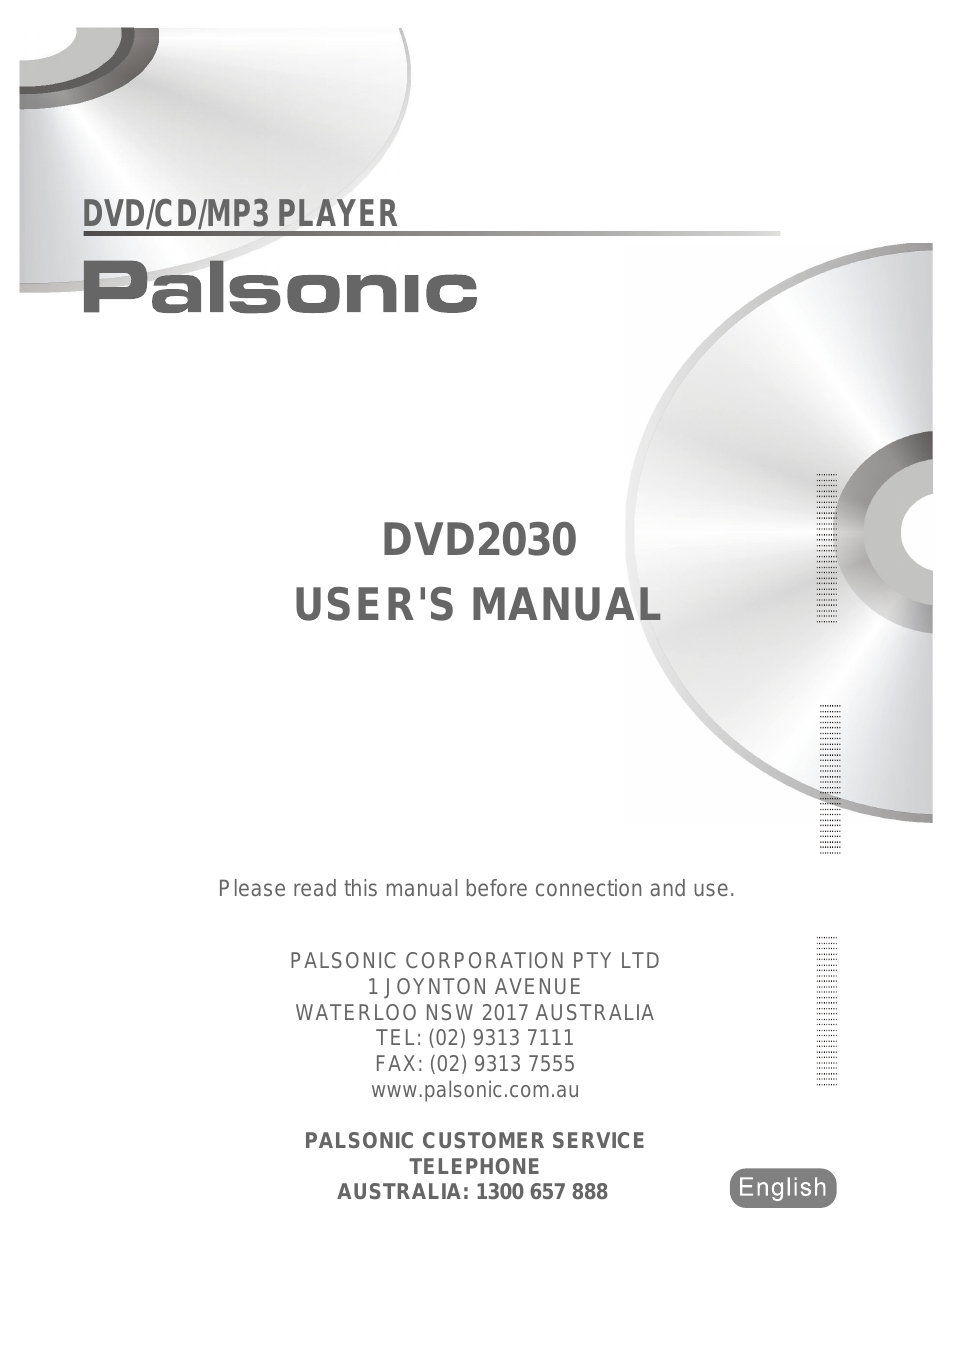 DVD/CD/MP3 Player DVD2030 (Page 1)